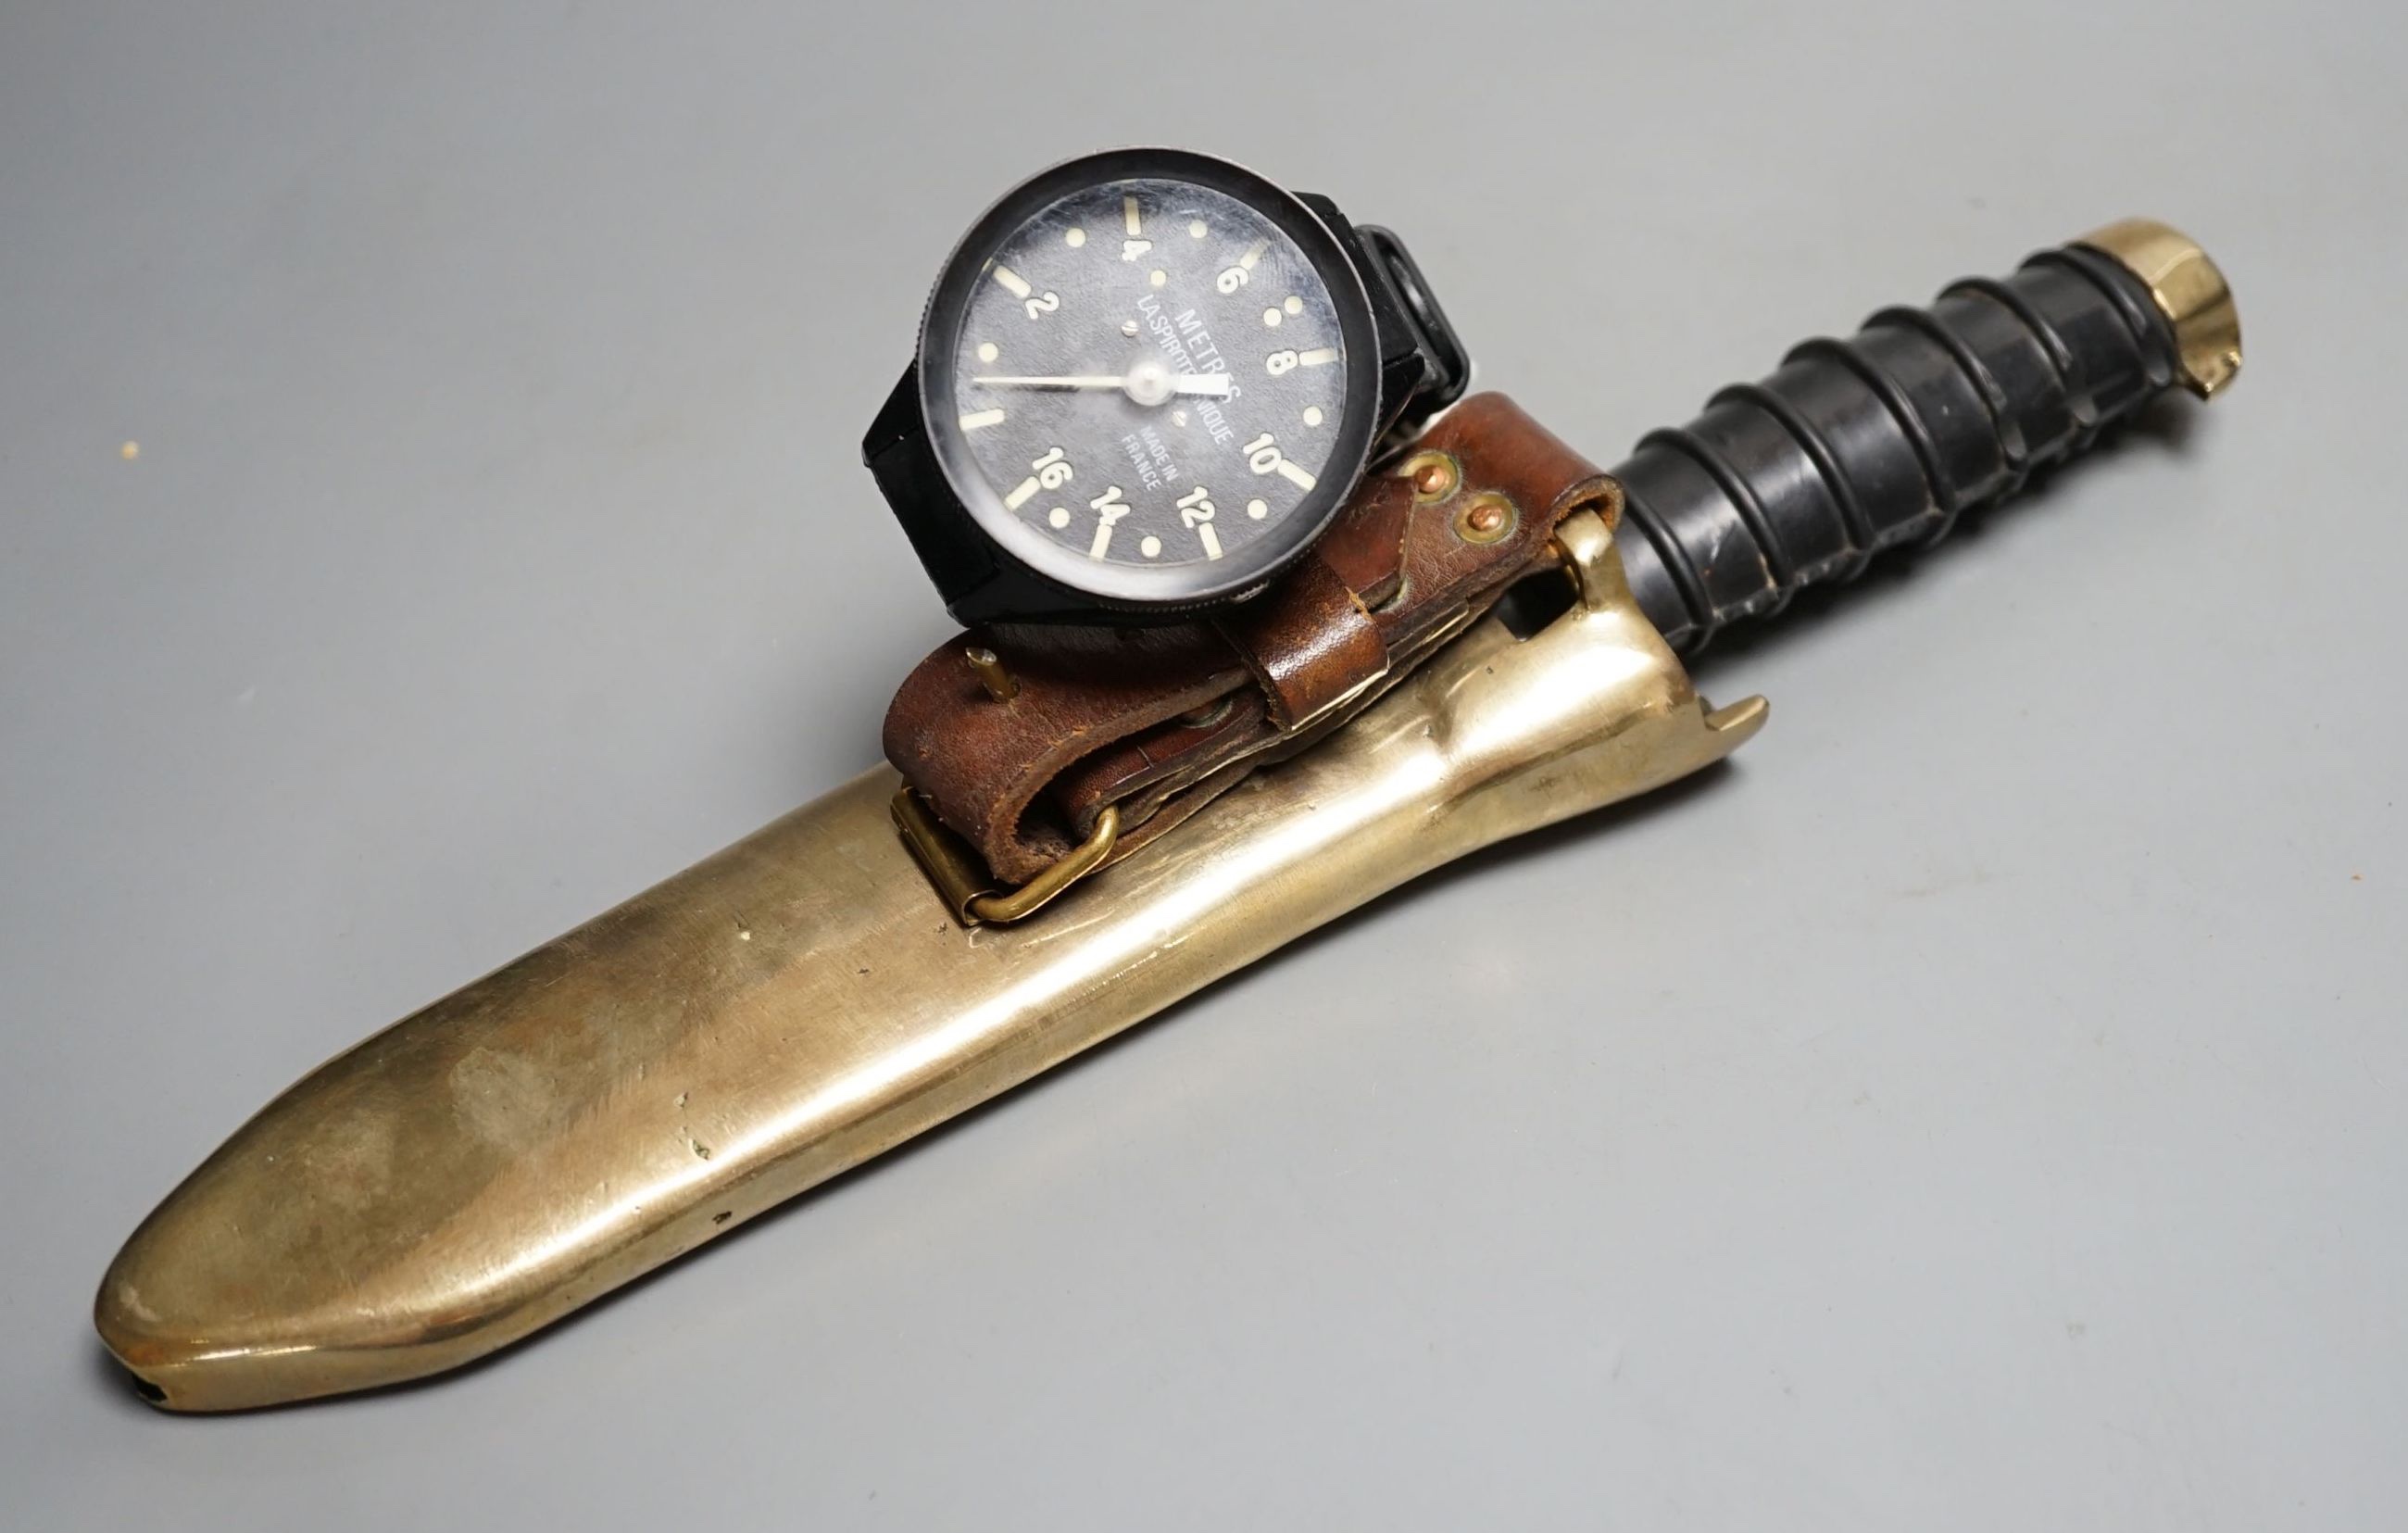 A Russian diver's knife, Spirotechnique diver's wristwatch, Knife 32 cms long.